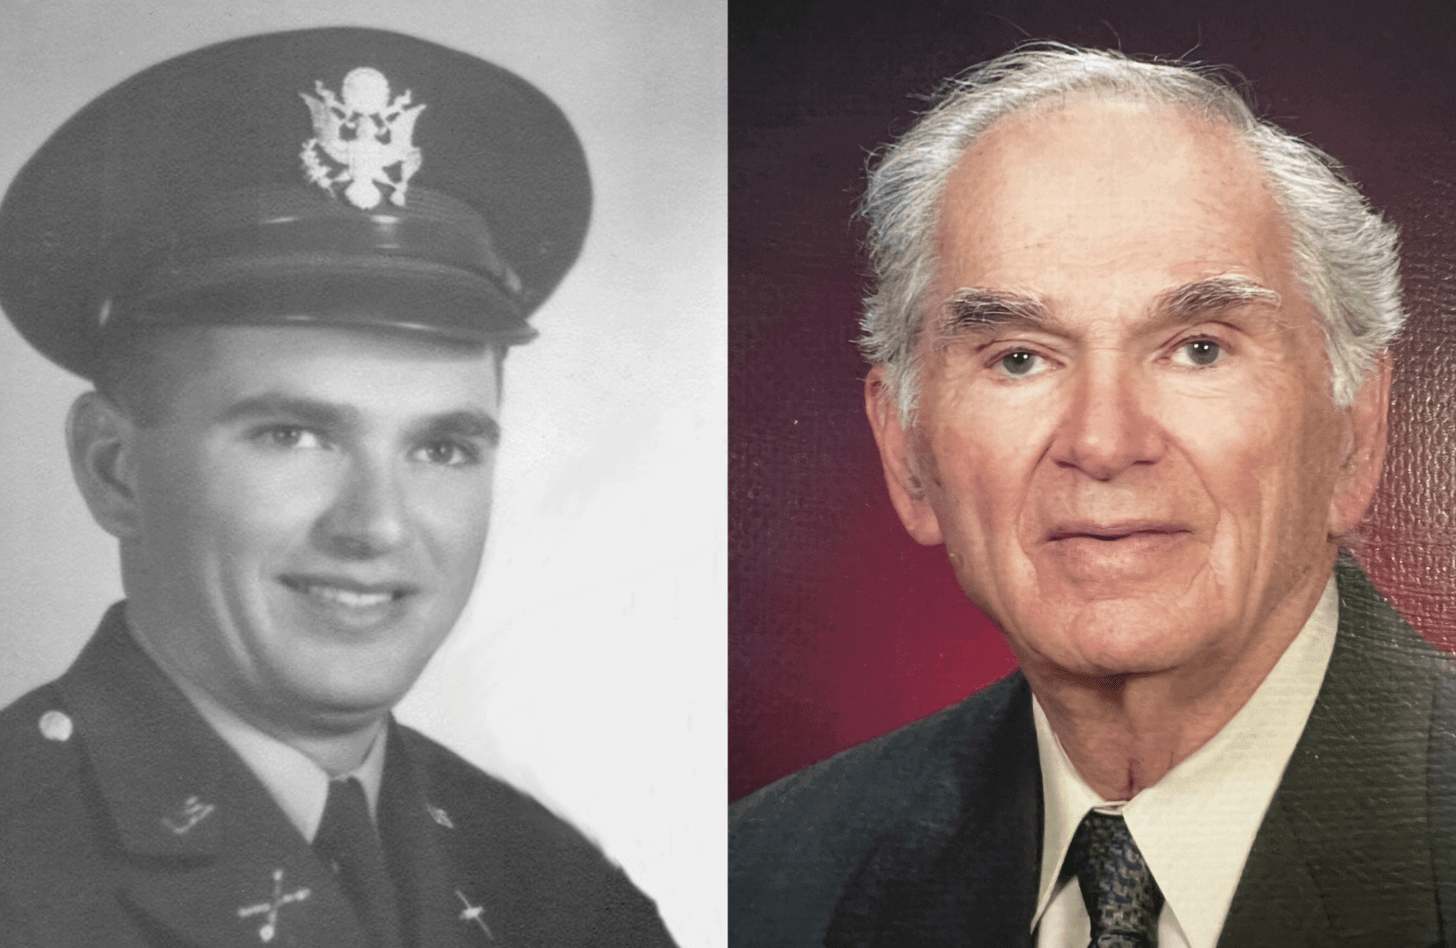 Left: Mr. Orville Duane Allen in his military portrait from the Korean War. Right: Mr. Allen pictured in 2006.